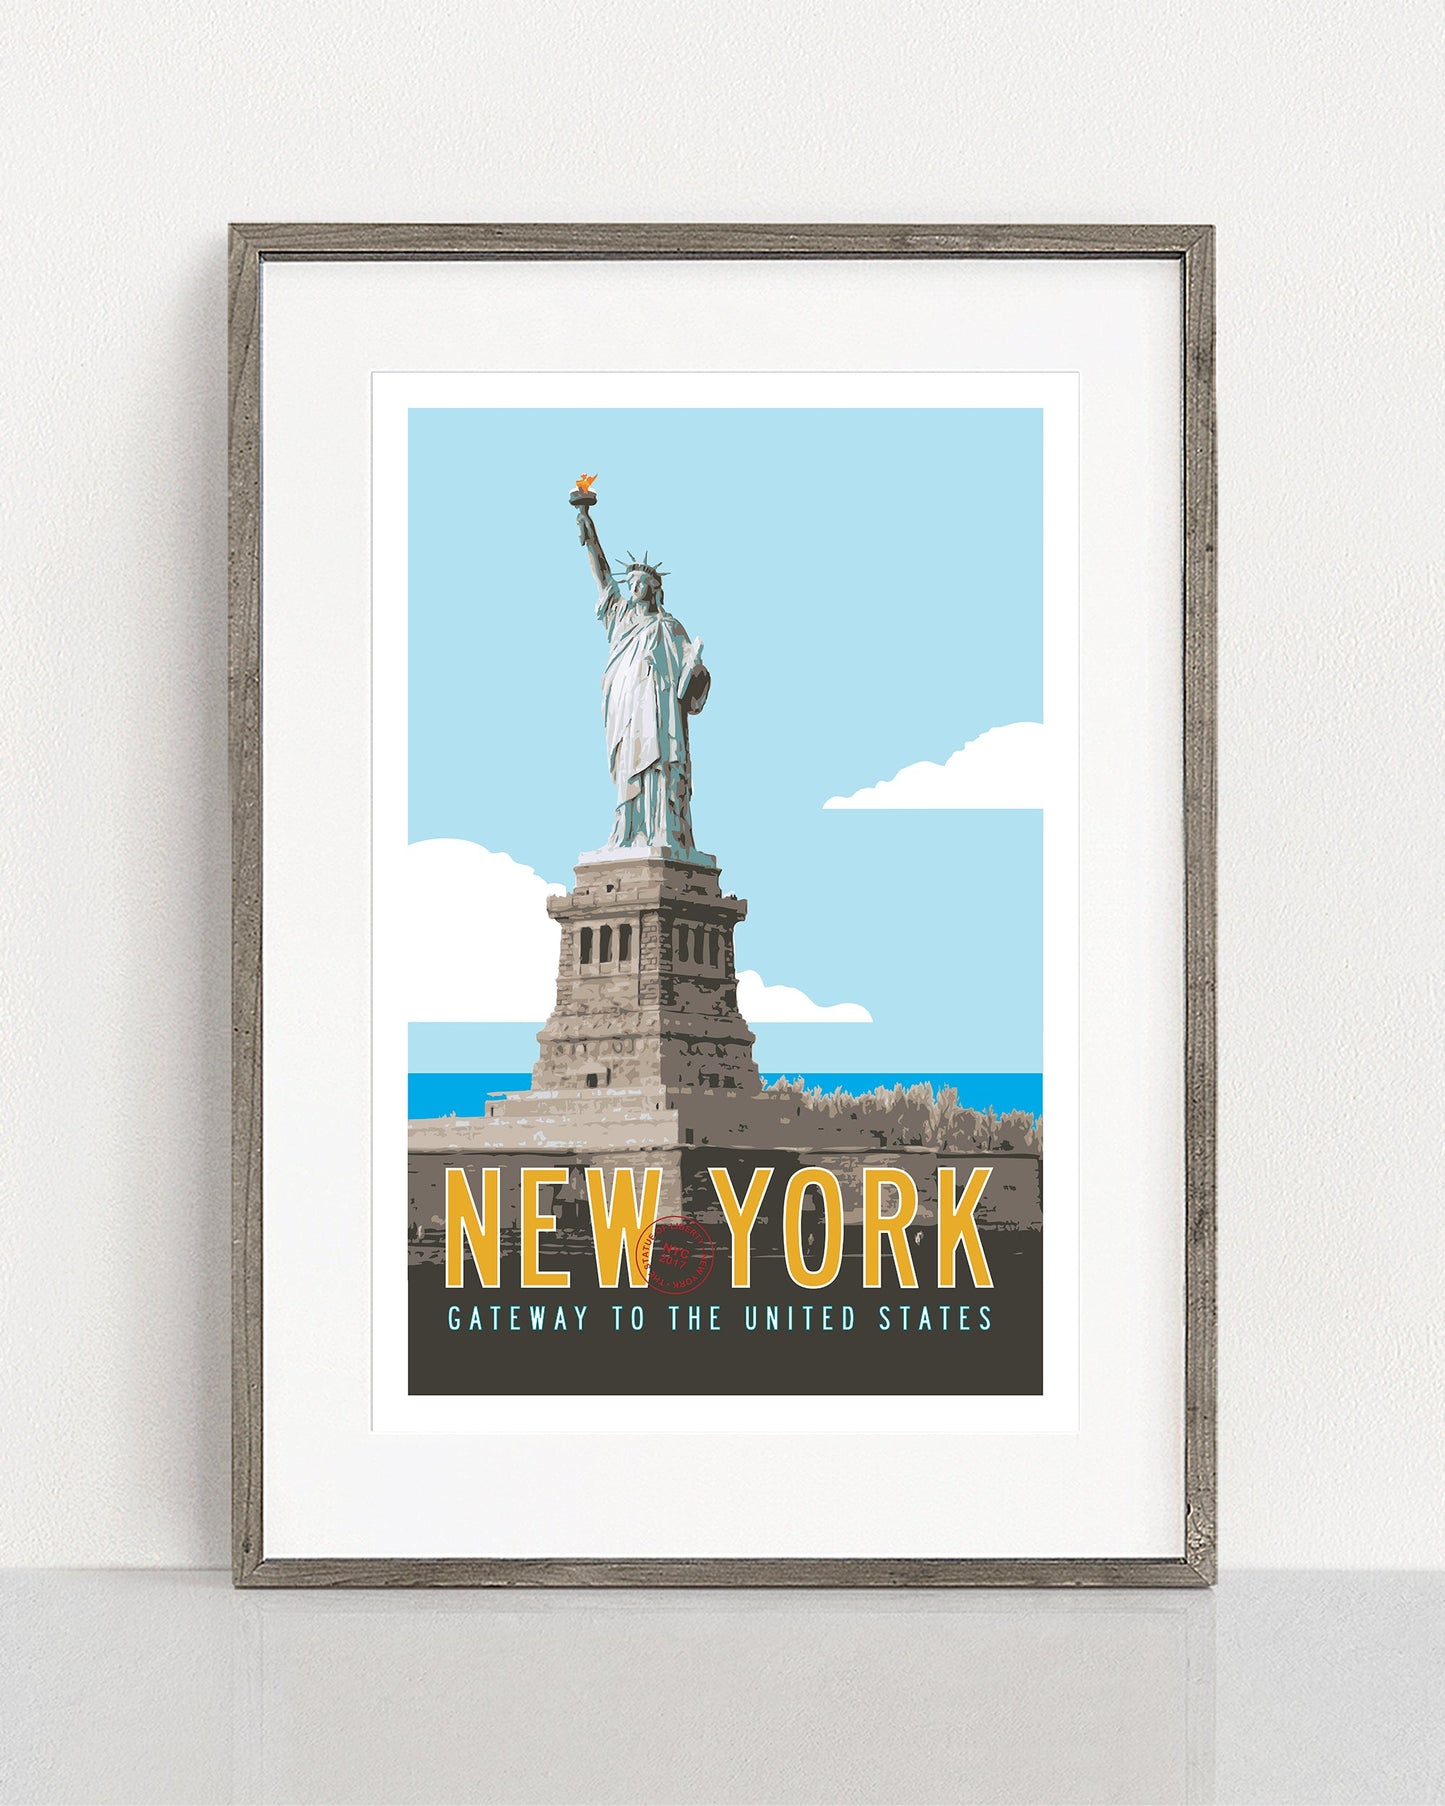 Framed Vintage New York Travel Poster art - Transit Design